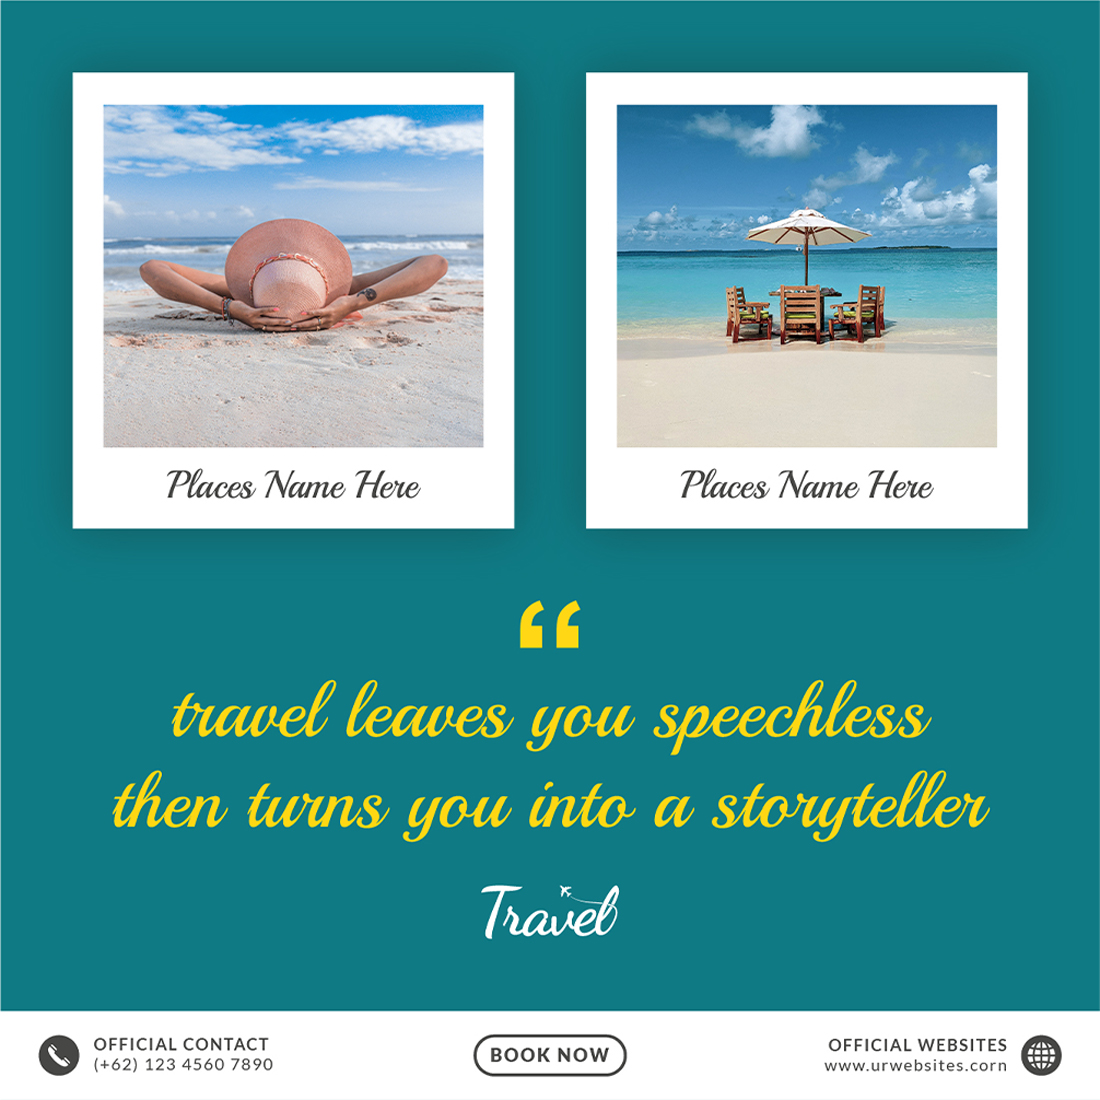 Leisure & Travel Social Media Post Templates example.